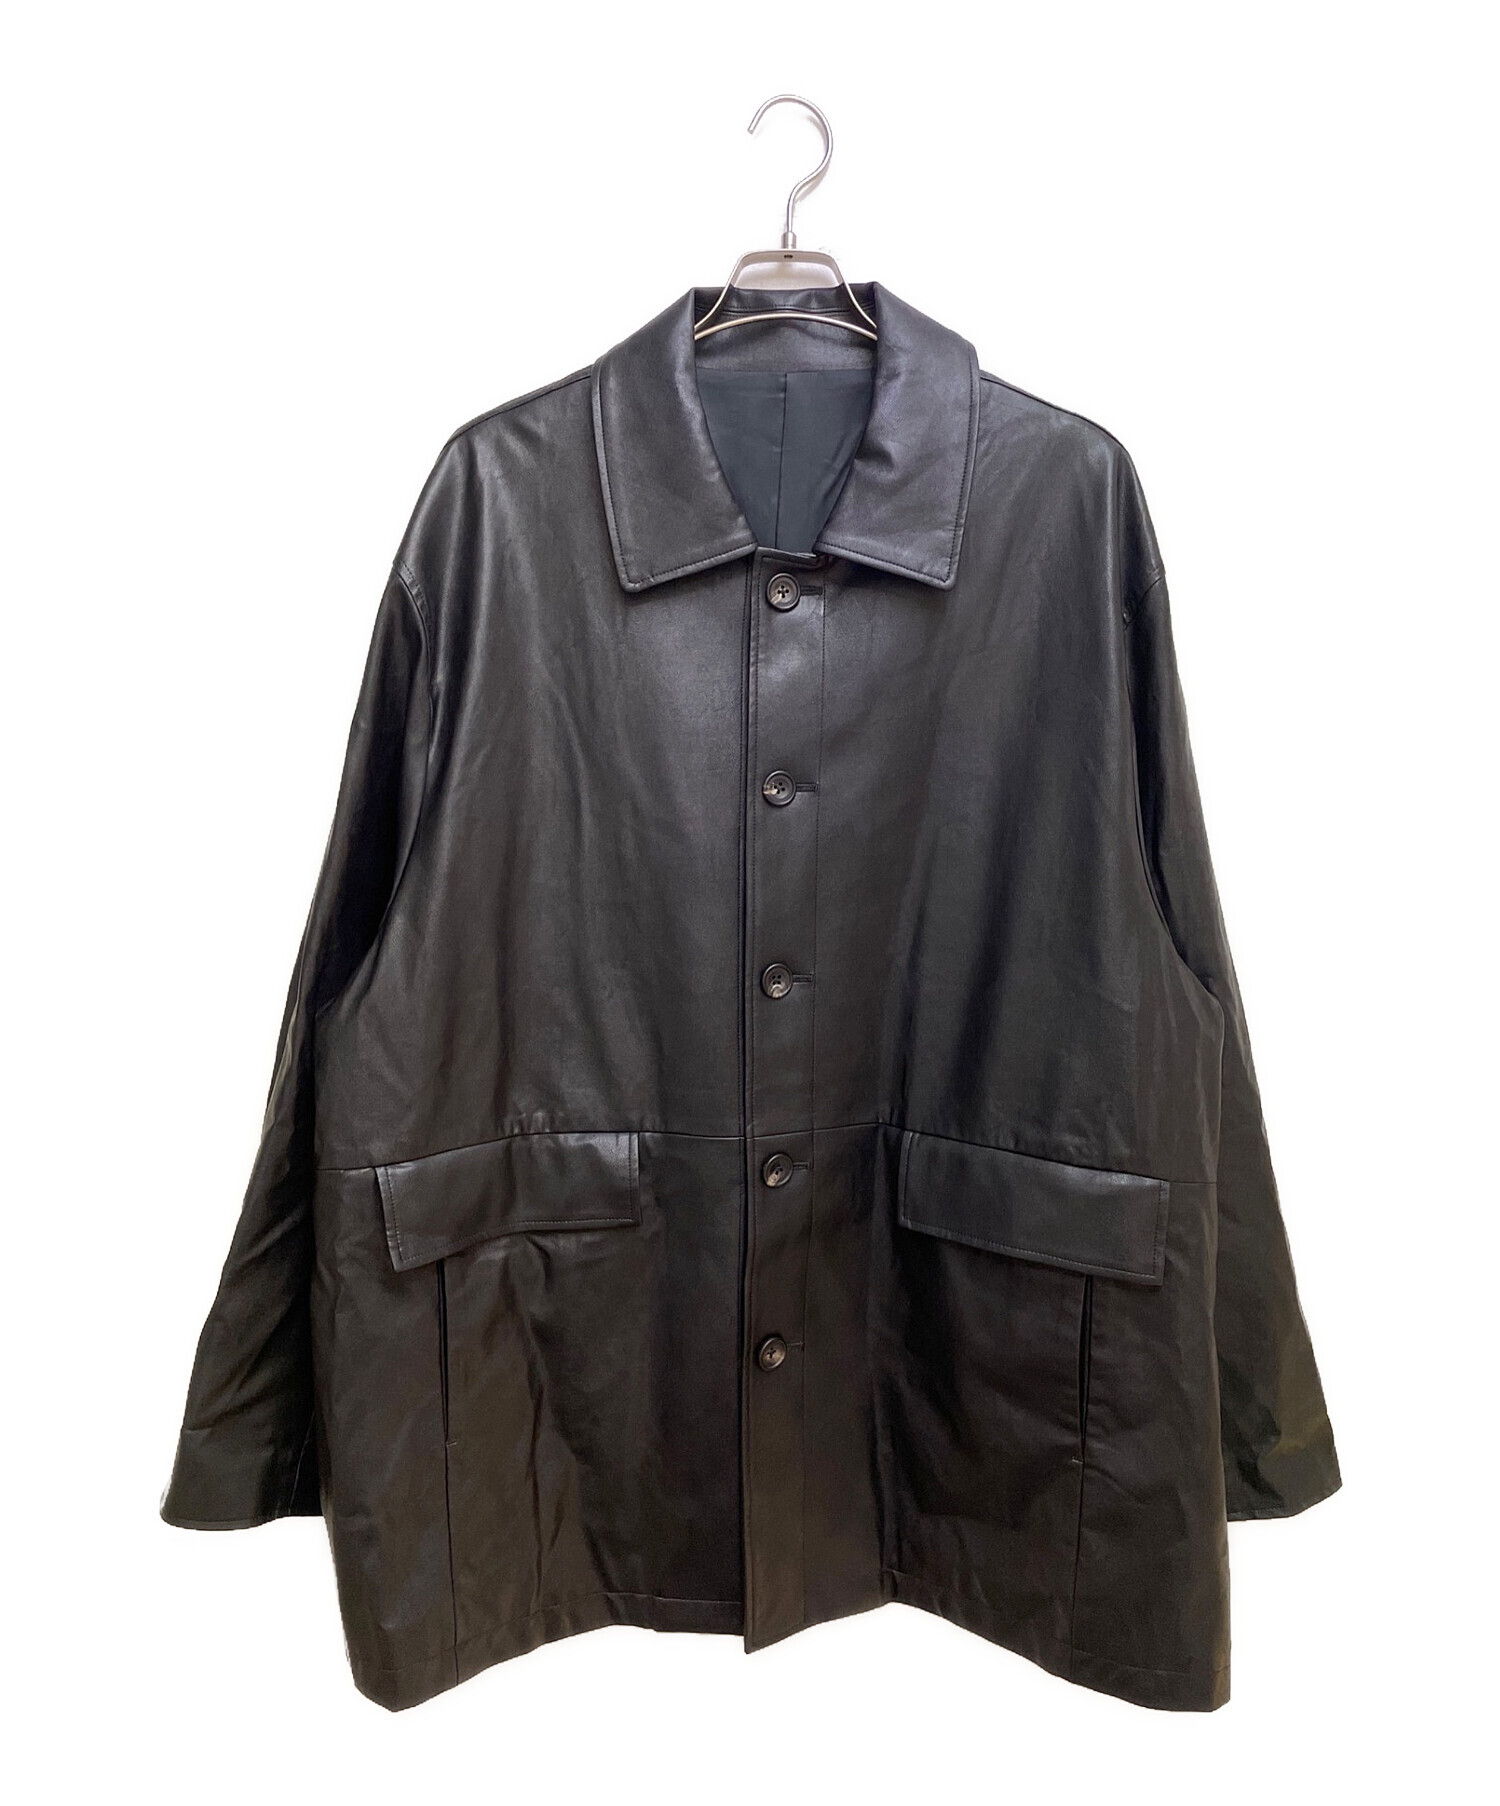 steinシュタインstein fake leather car jacket - レザージャケット